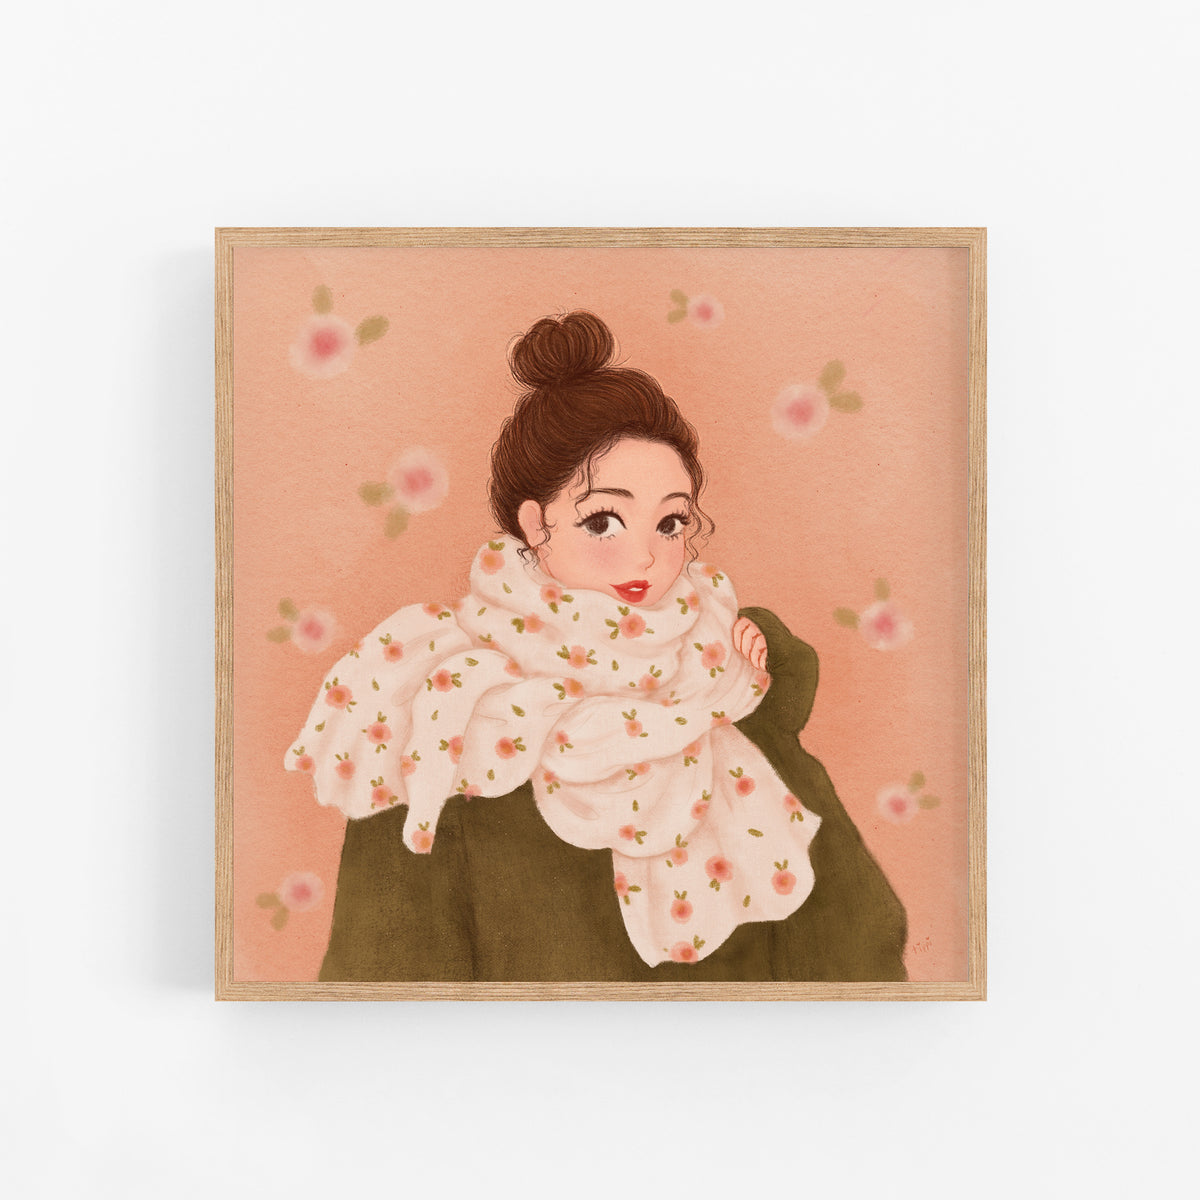 Girl with Floral Scarf, Giclée Art Print